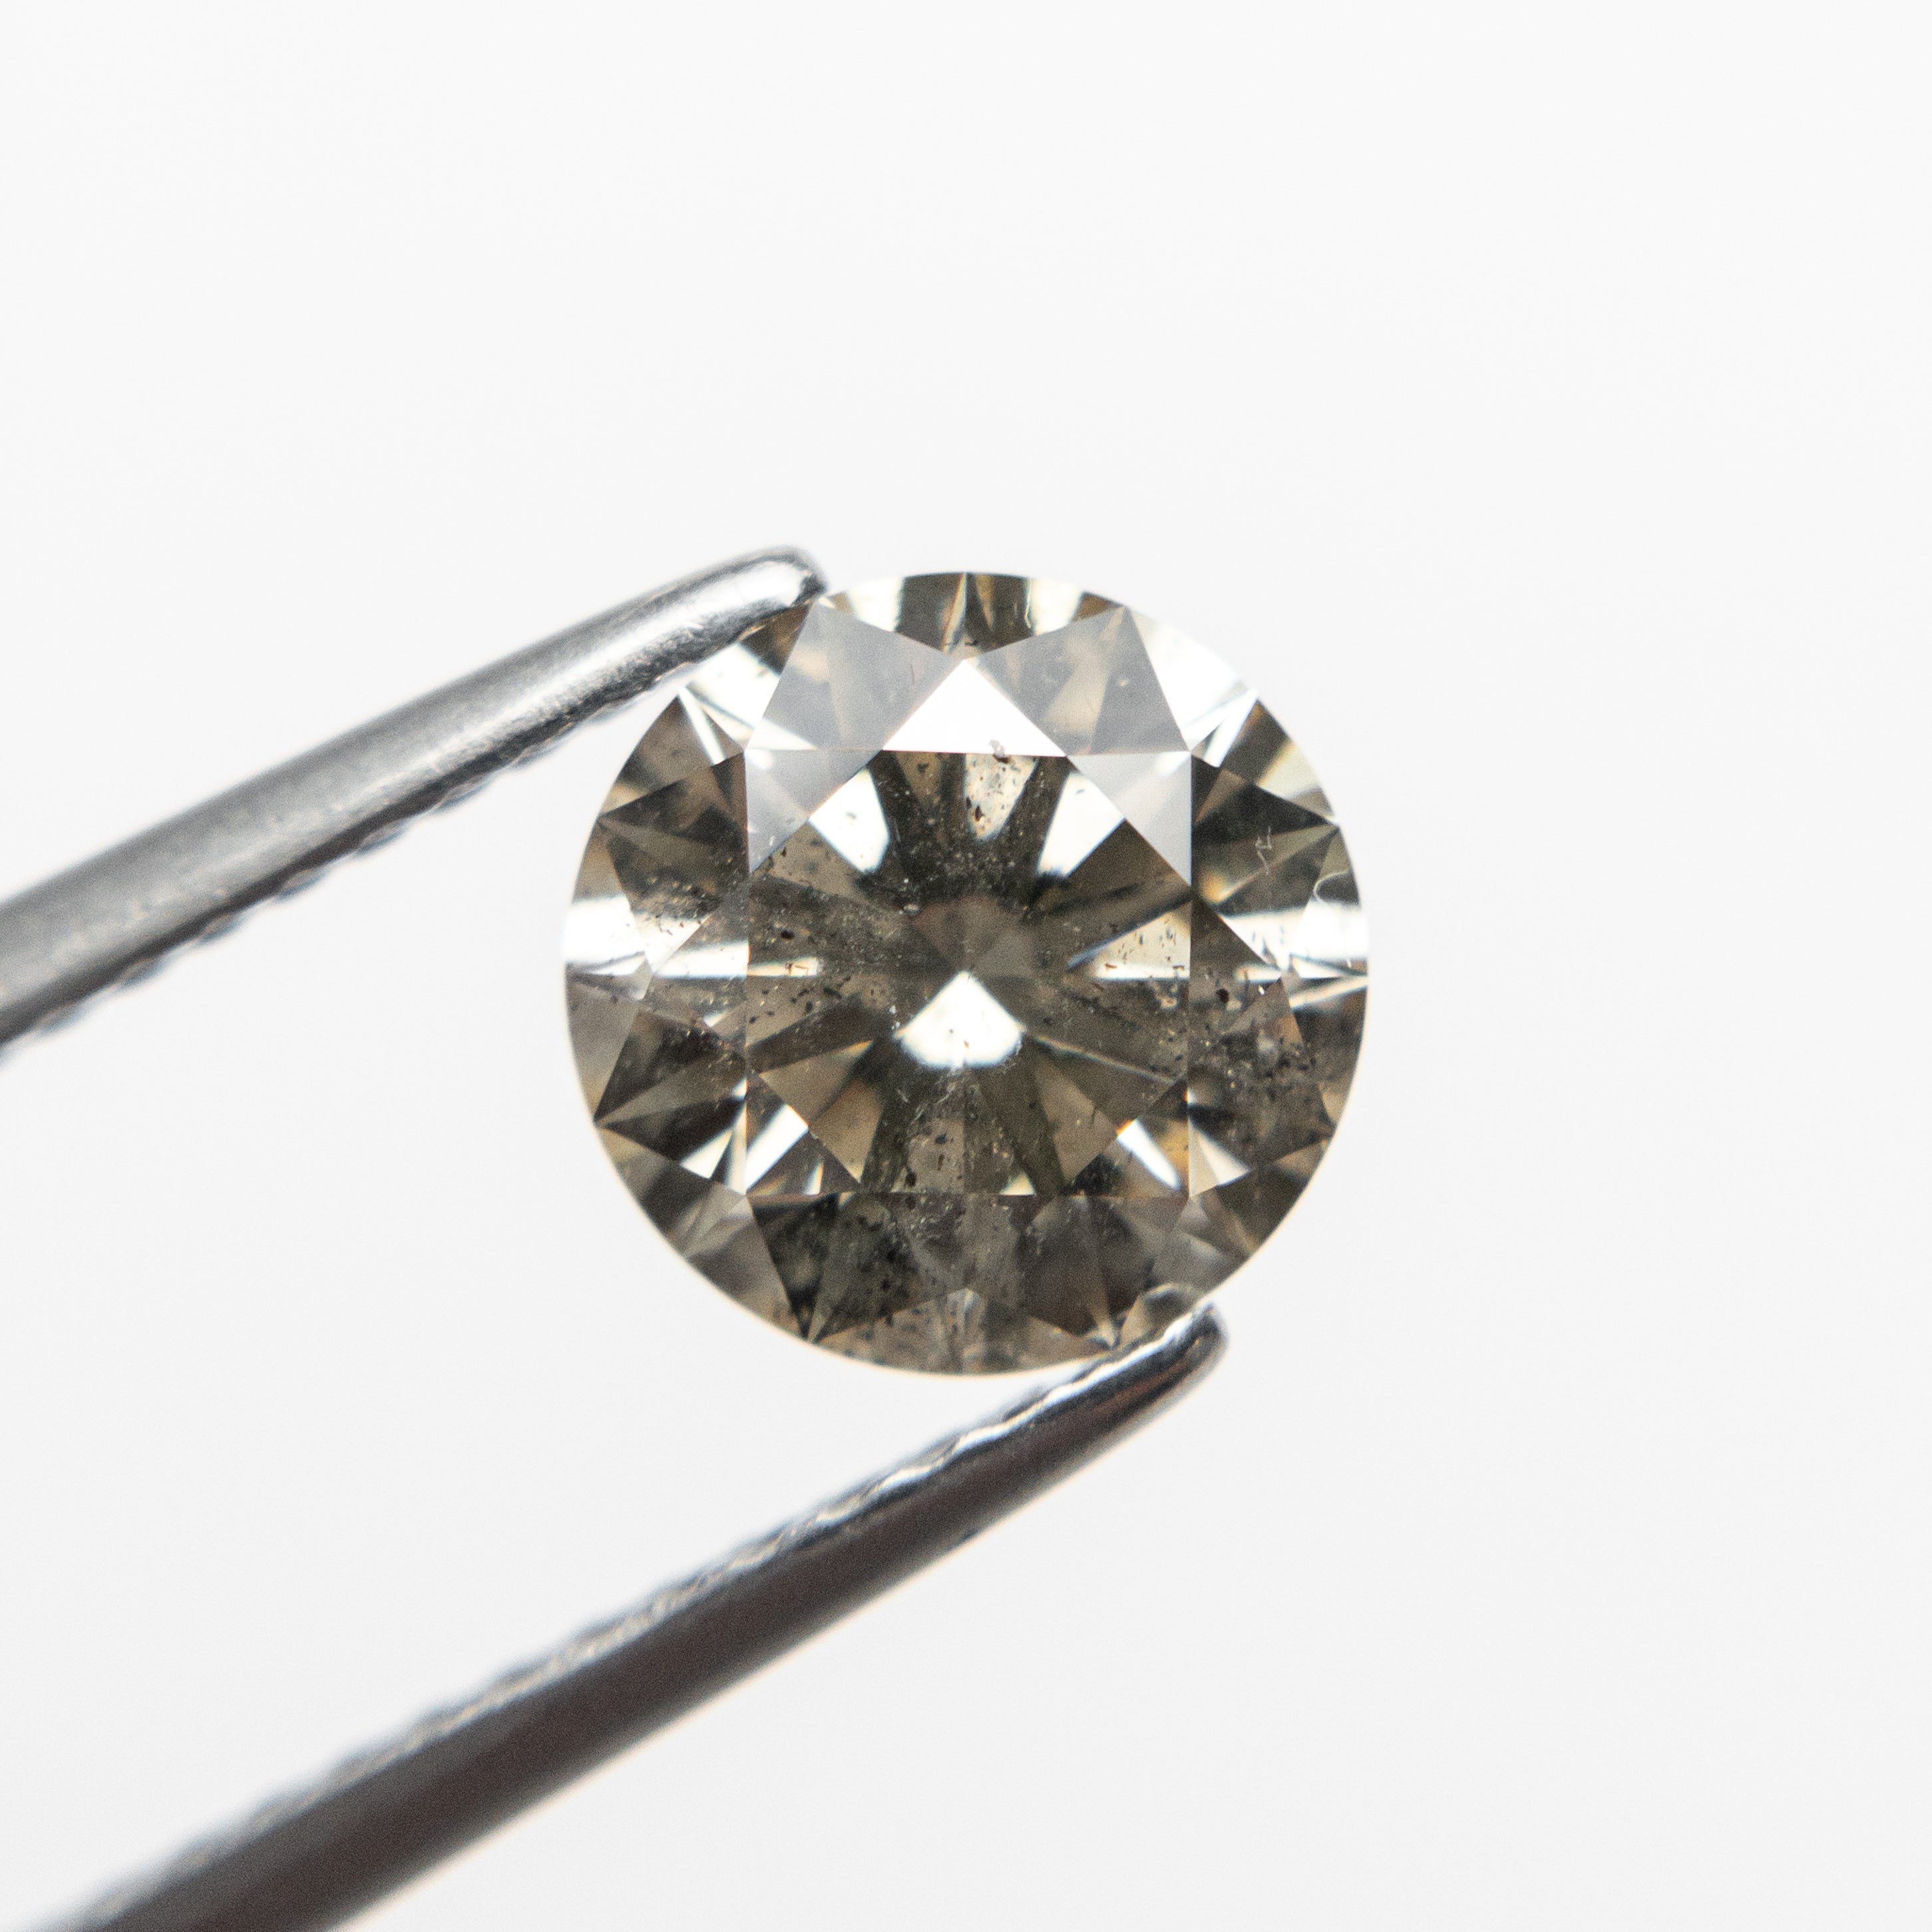 1.55ct 7.38x7.37x4.58mm I1 Round Brilliant 19163-55 🇨🇦 - Misfit Diamonds